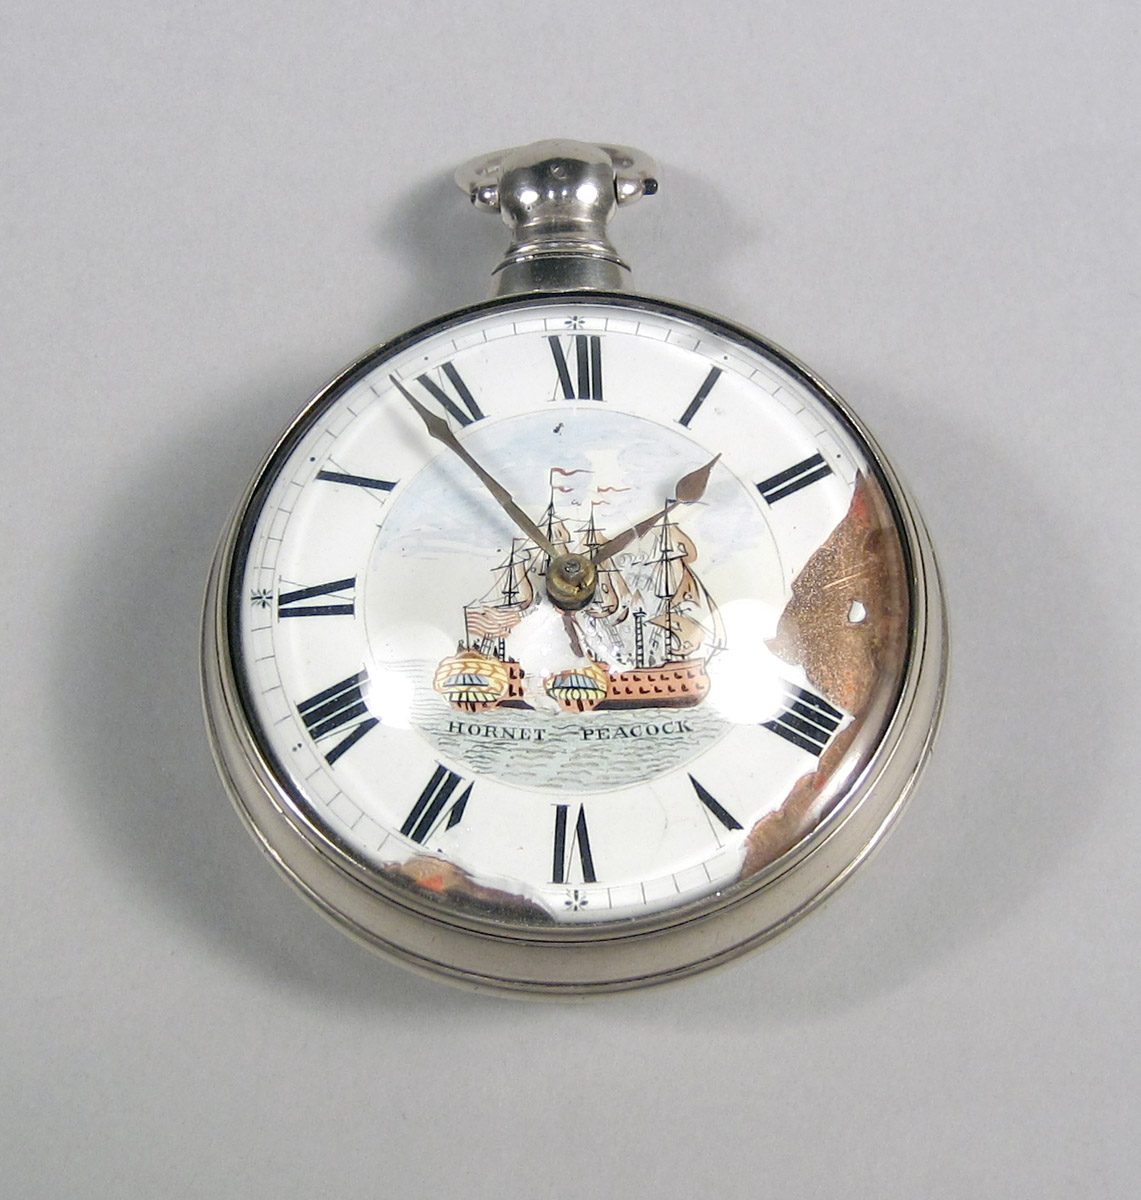 Clocks, Watches, and Scientific Instruments - Watch